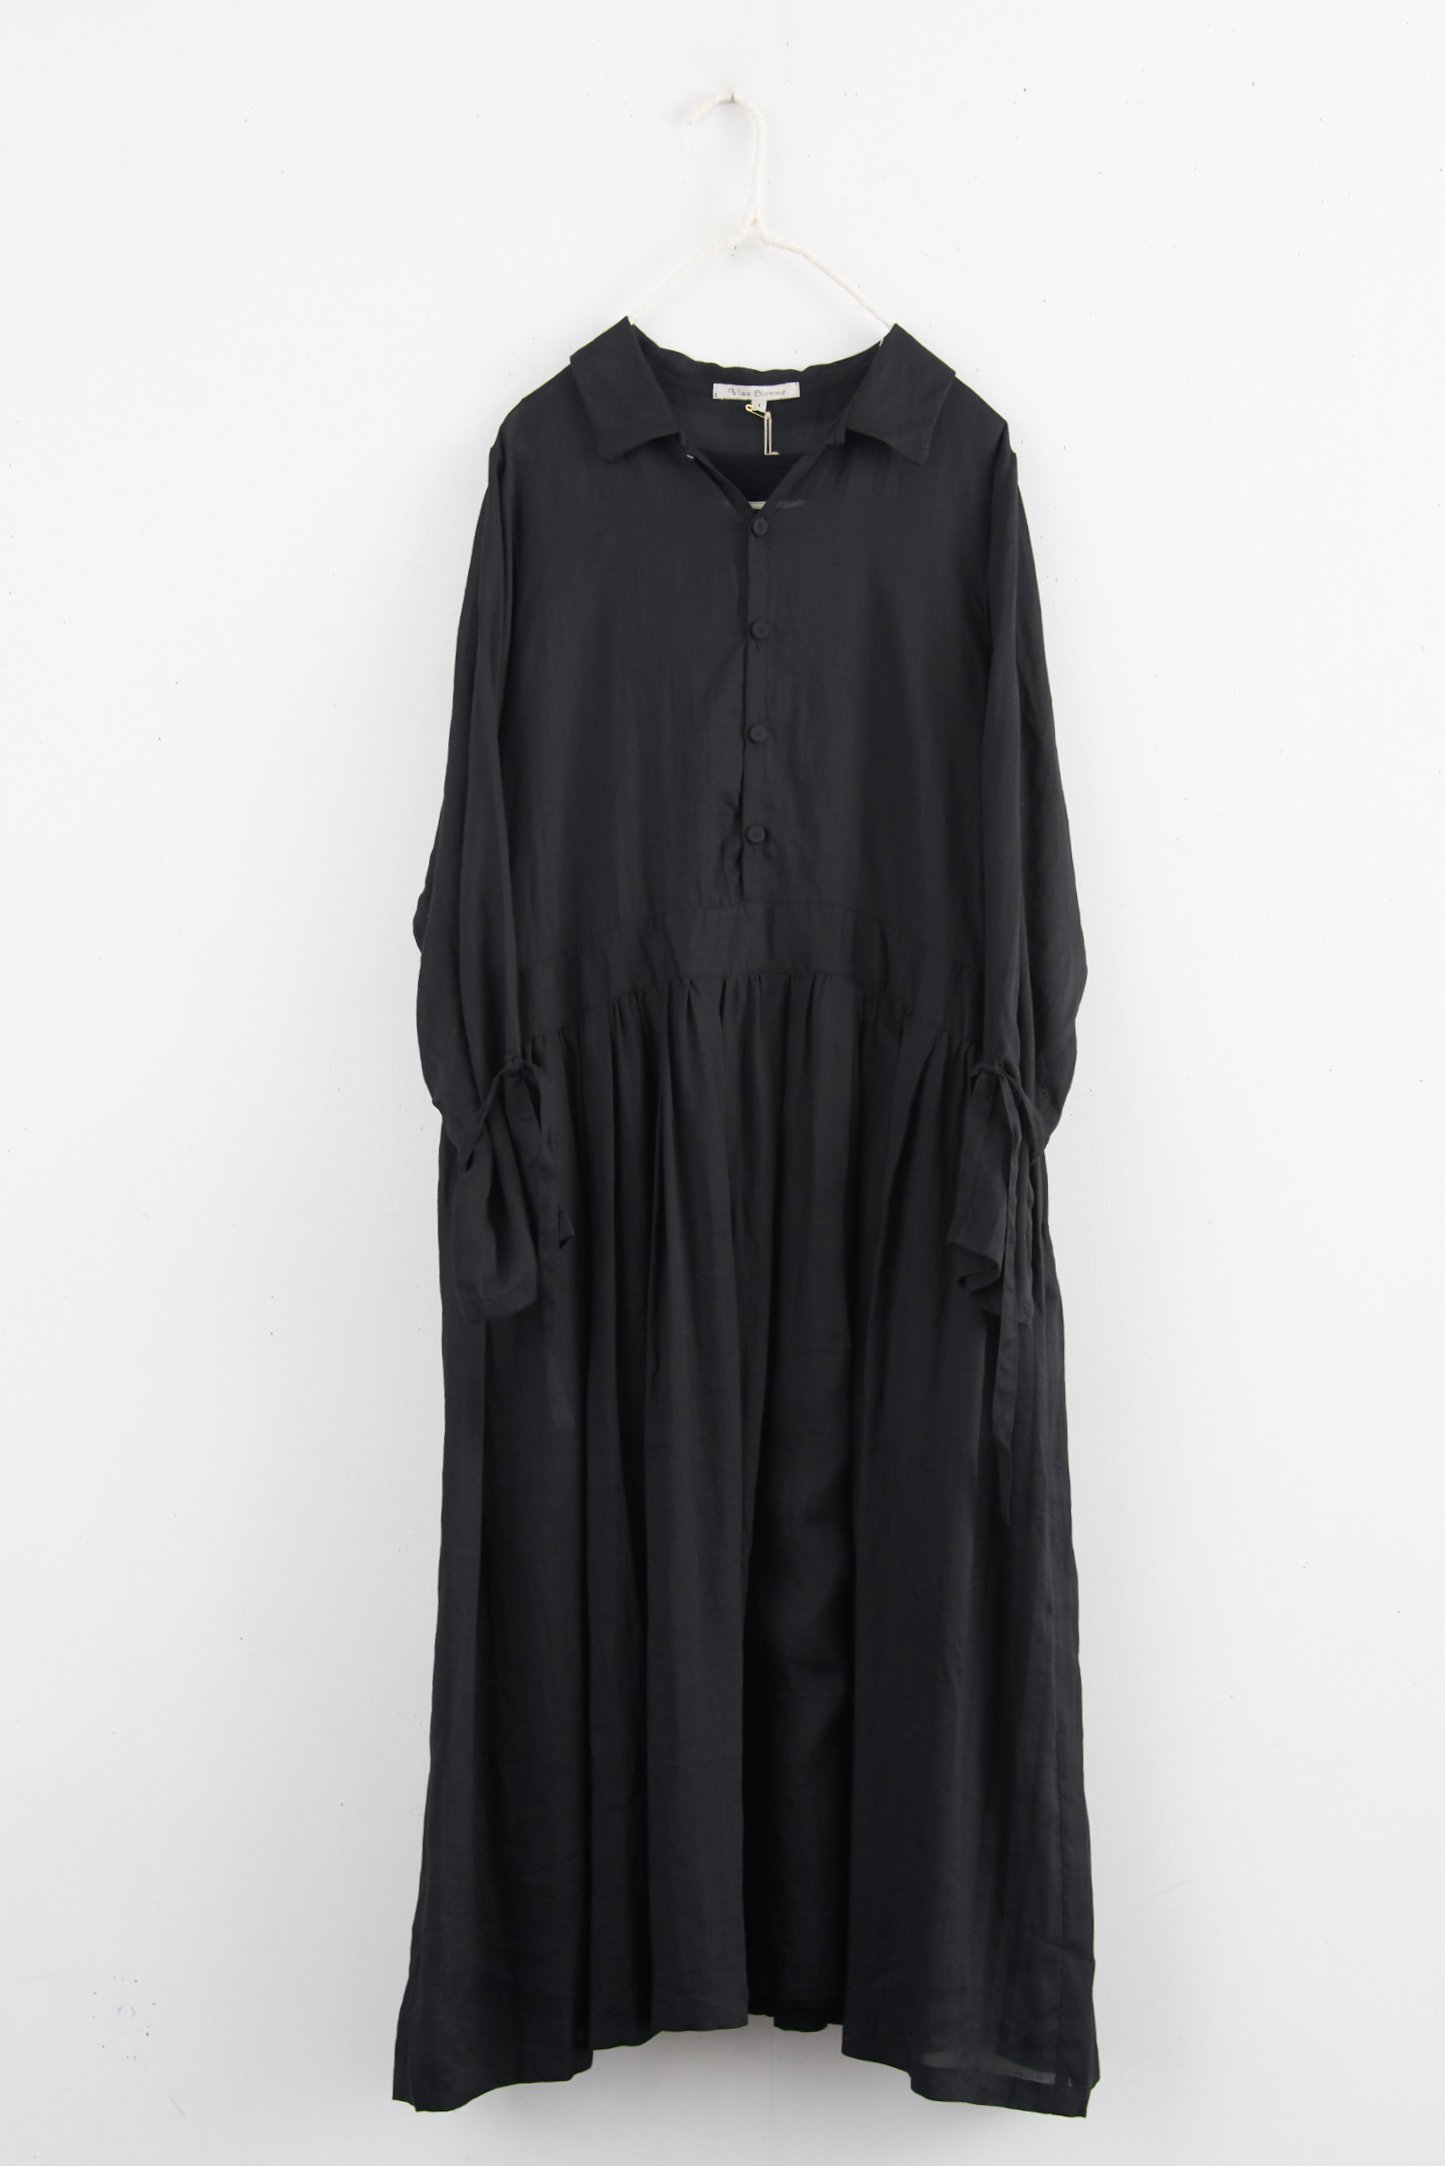 vlas blomme Black dress カバードレス - poooL (online shop)